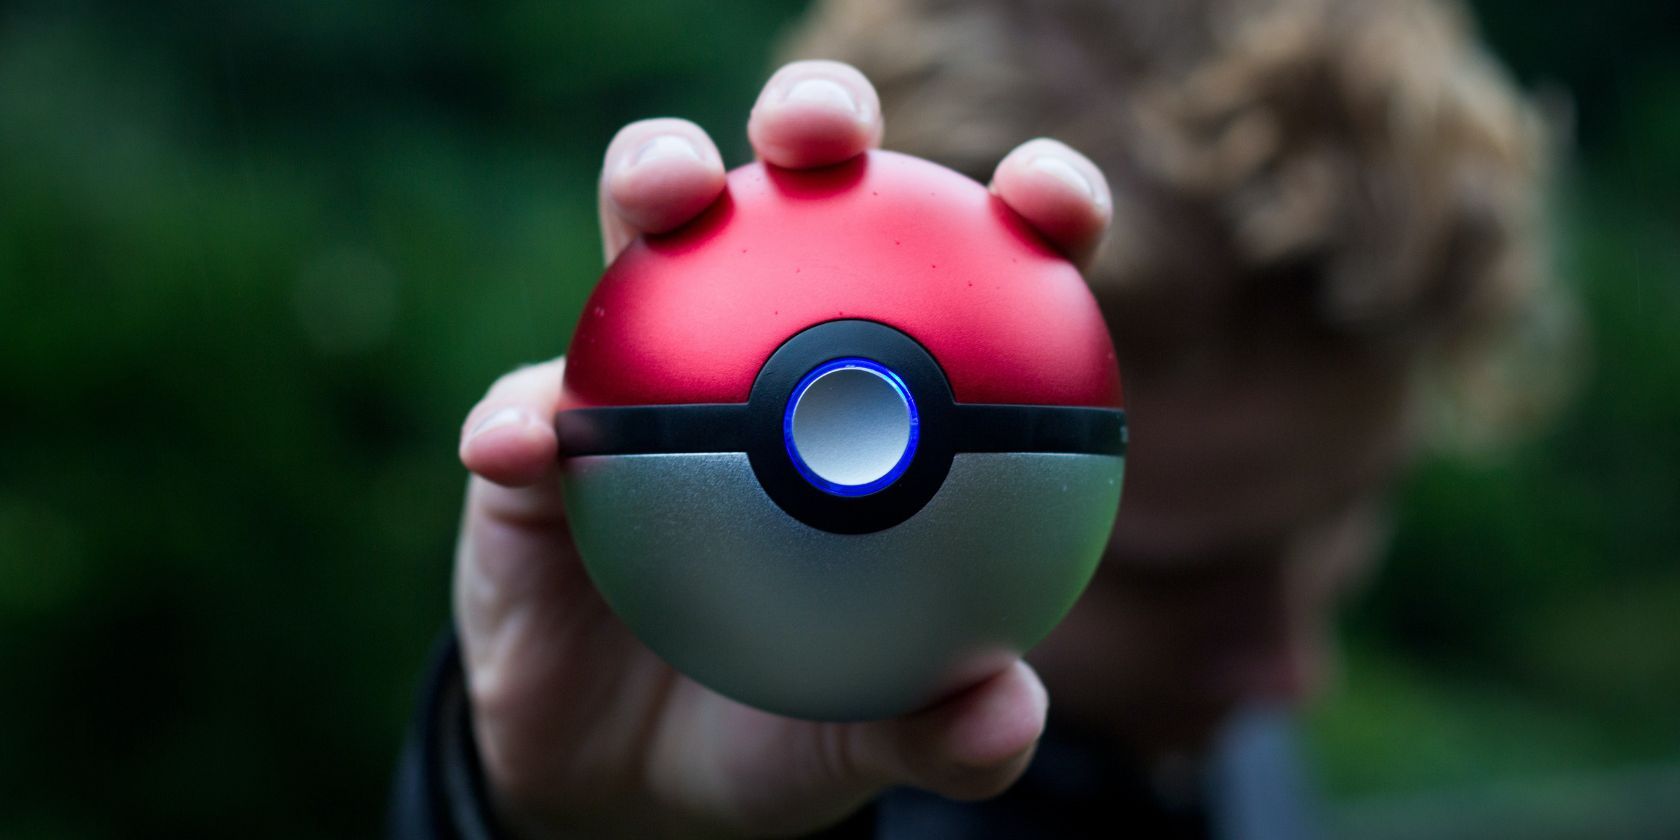 How to Connect and Use a Poké Ball Plus With Pokémon Go